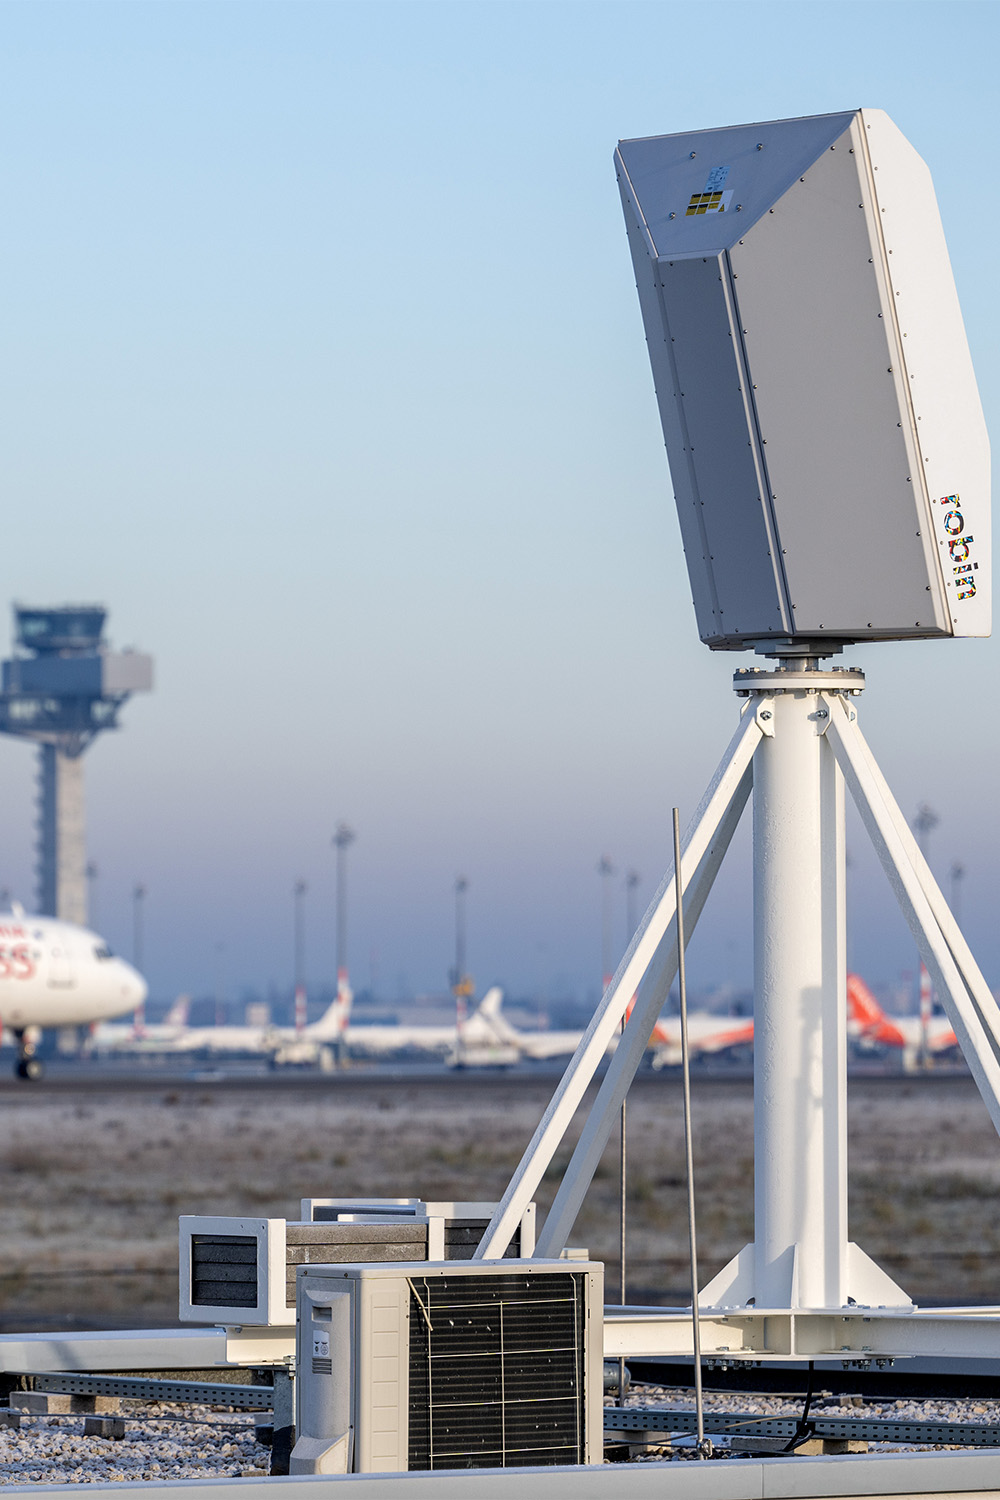 BER first German airport to use new bird radar